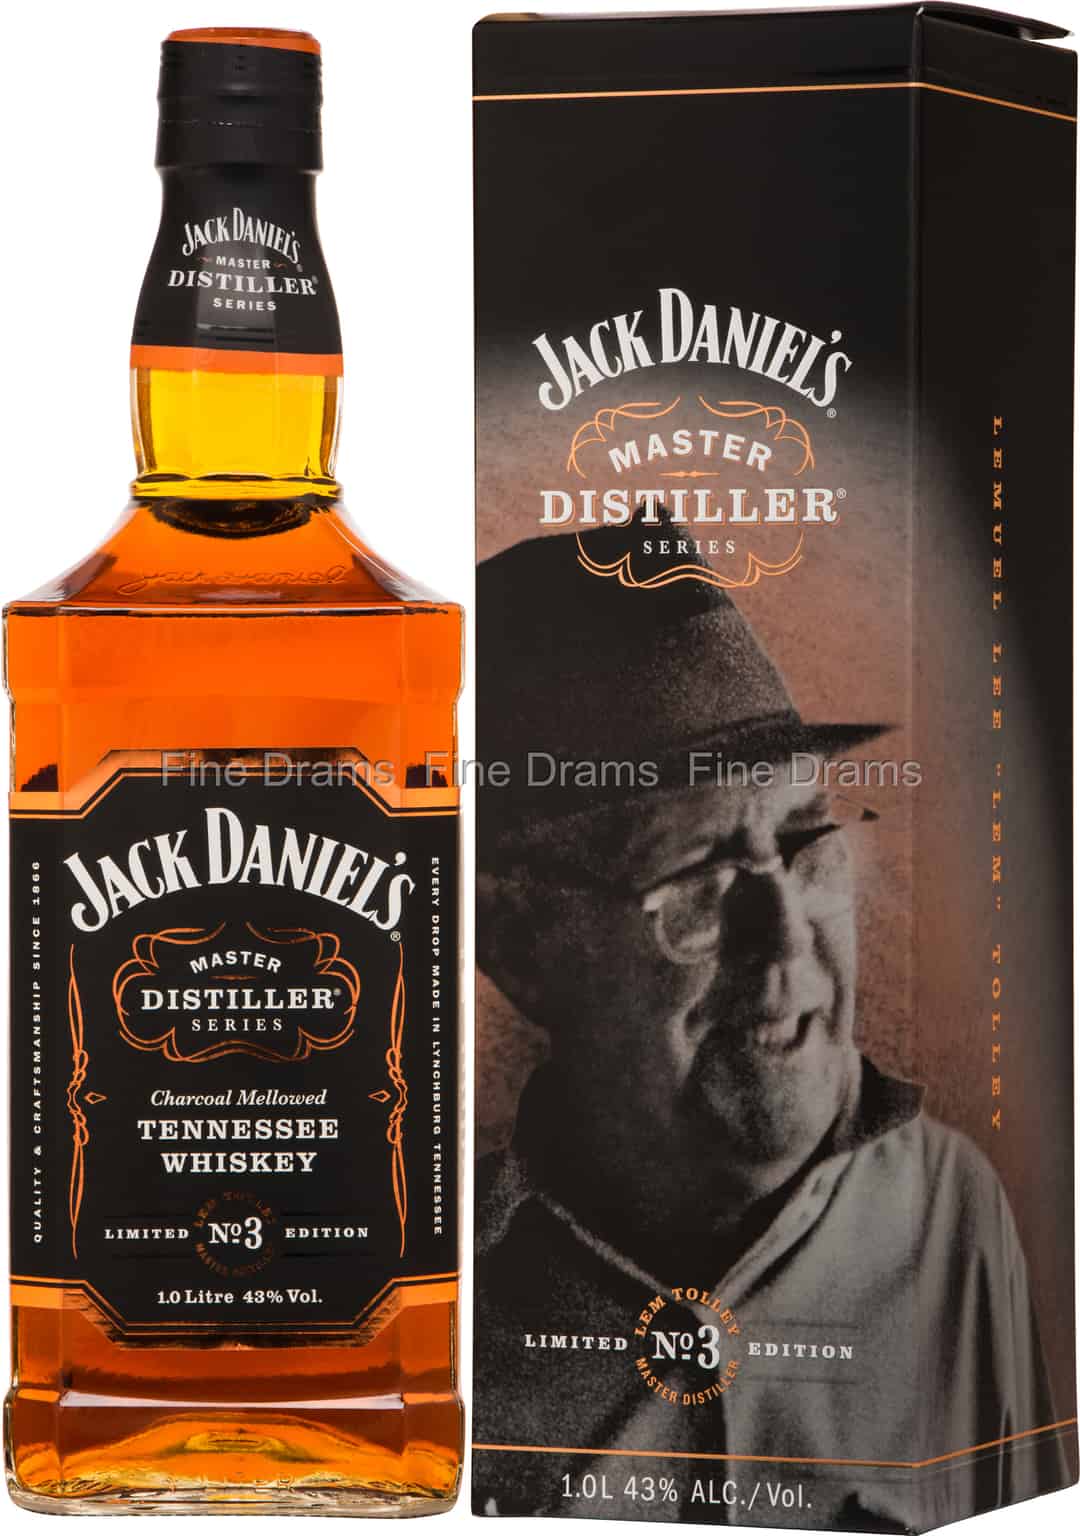 https://images.finedrams.com/image/45988-mediumlarge-1565729335/jack-daniels-master-distiller-no-3-whiskey.jpg